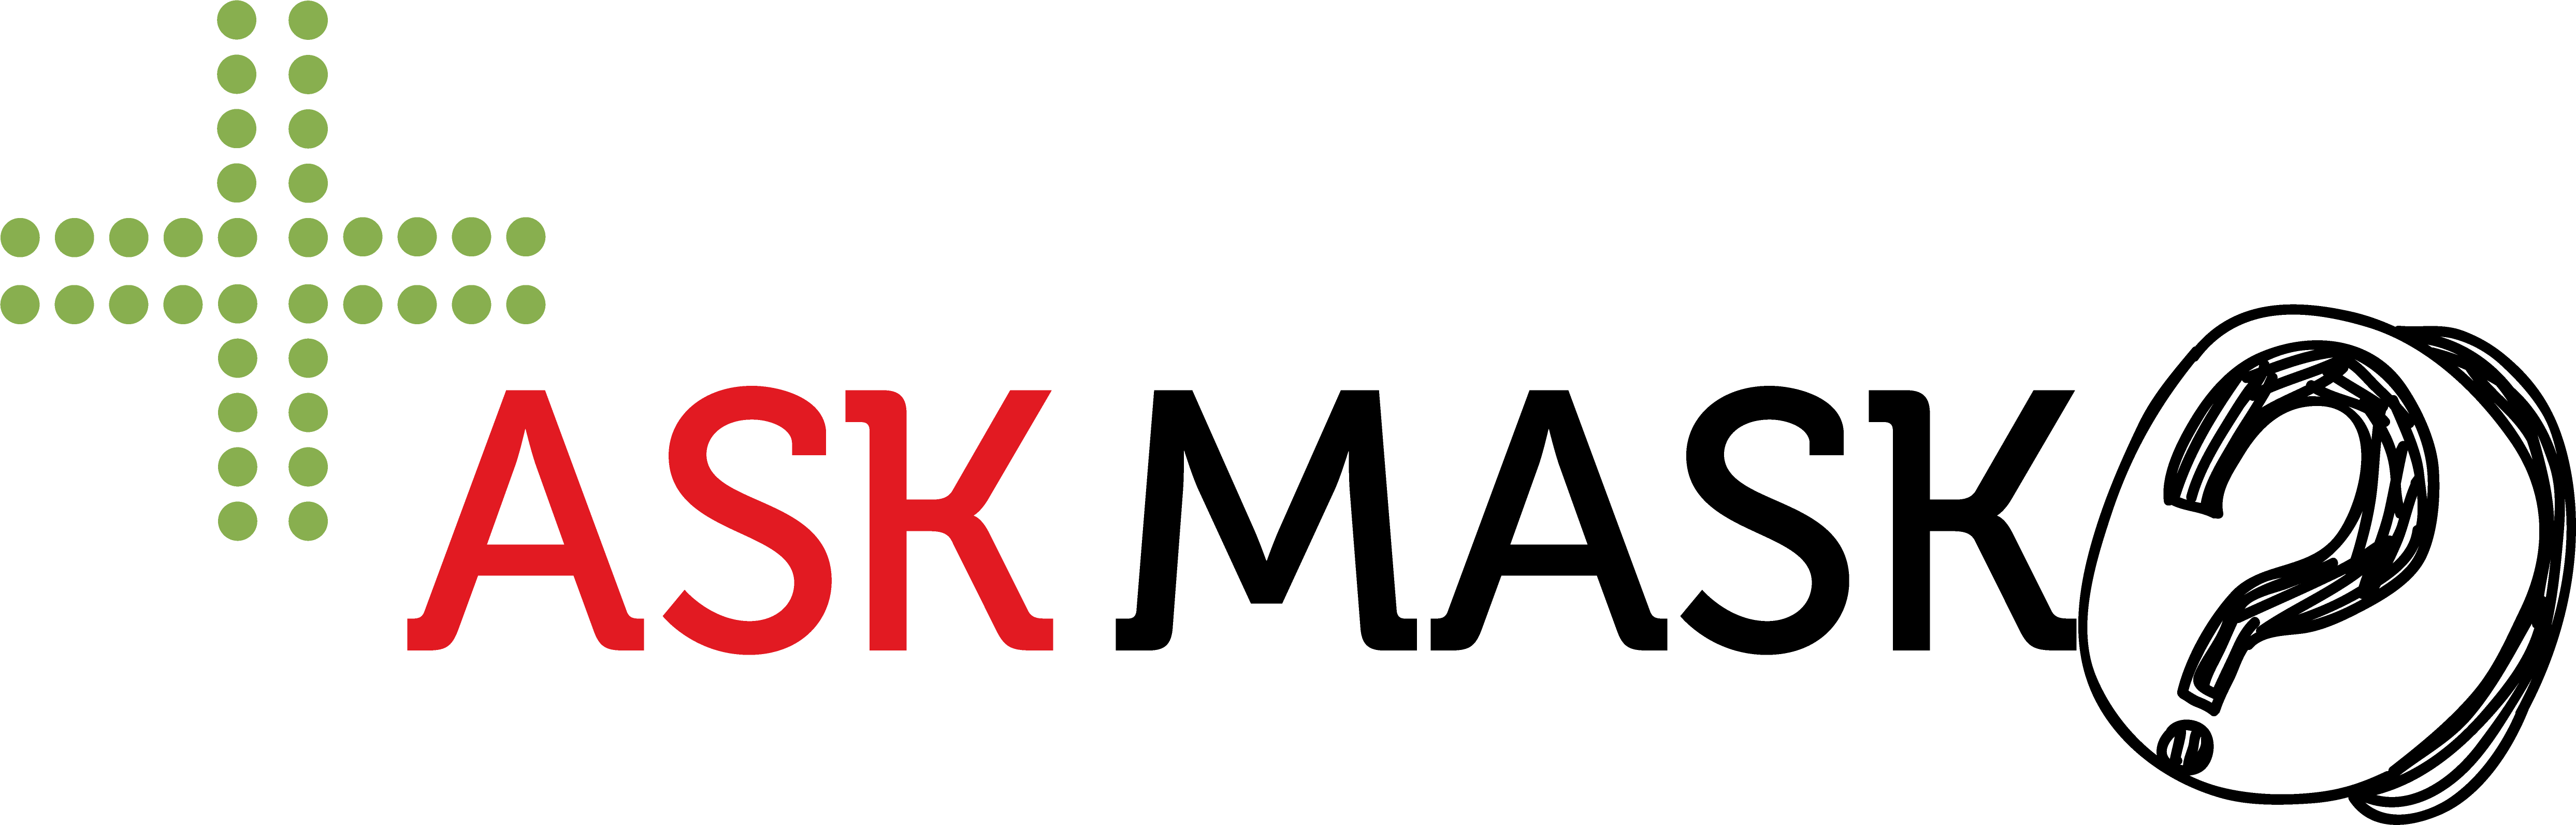 Ask School Logo - ASK MASK - Mothers Awareness on School-Aged Kids